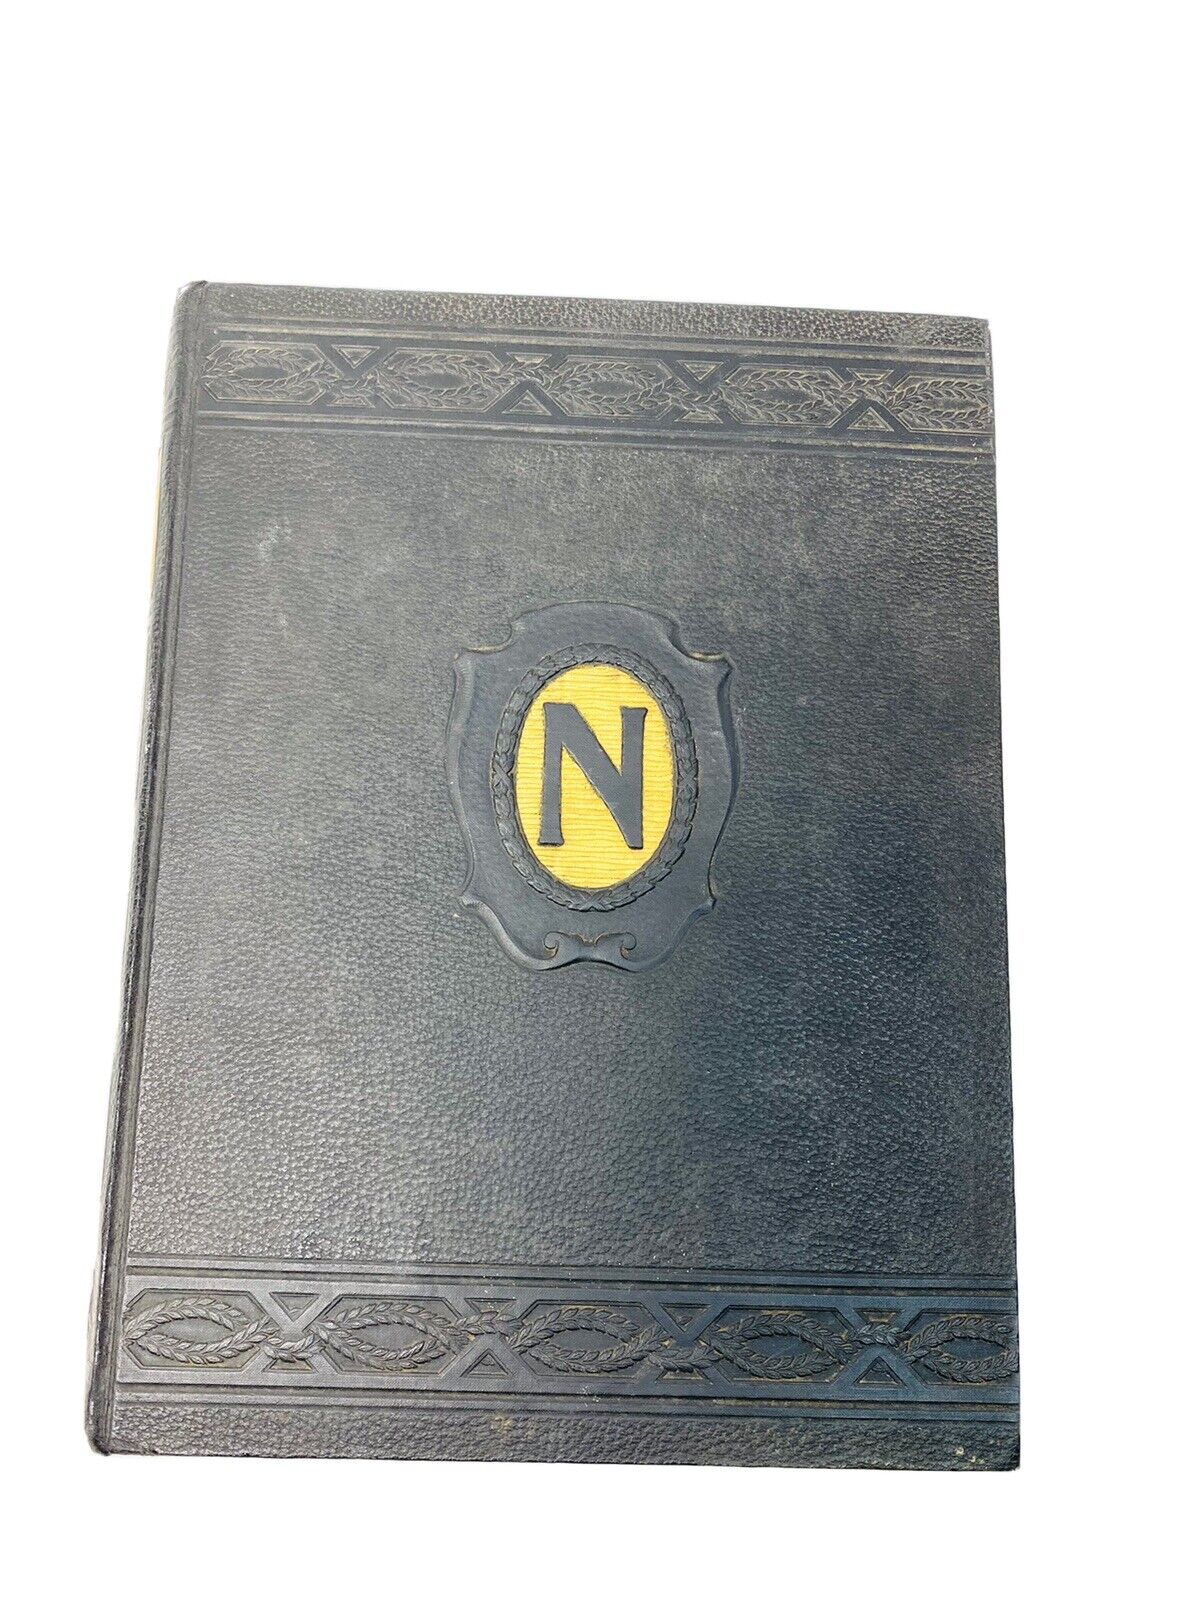 1926 THE CORNHUSKER - University of Nebraska Lincoln Yearbook Rare Vintage